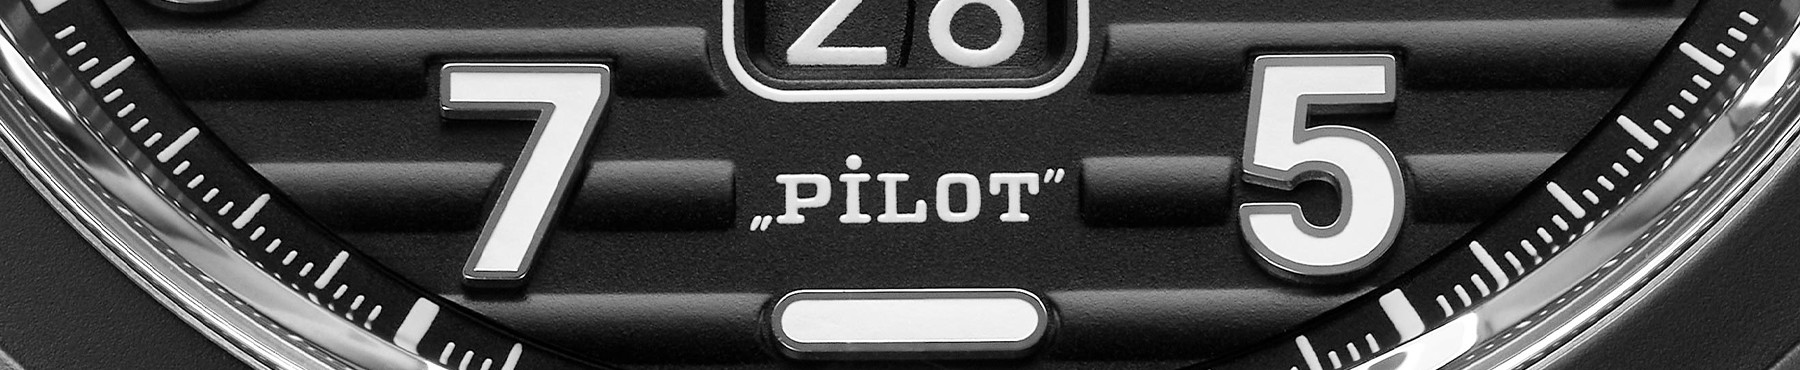 Zenith Pilot Watches